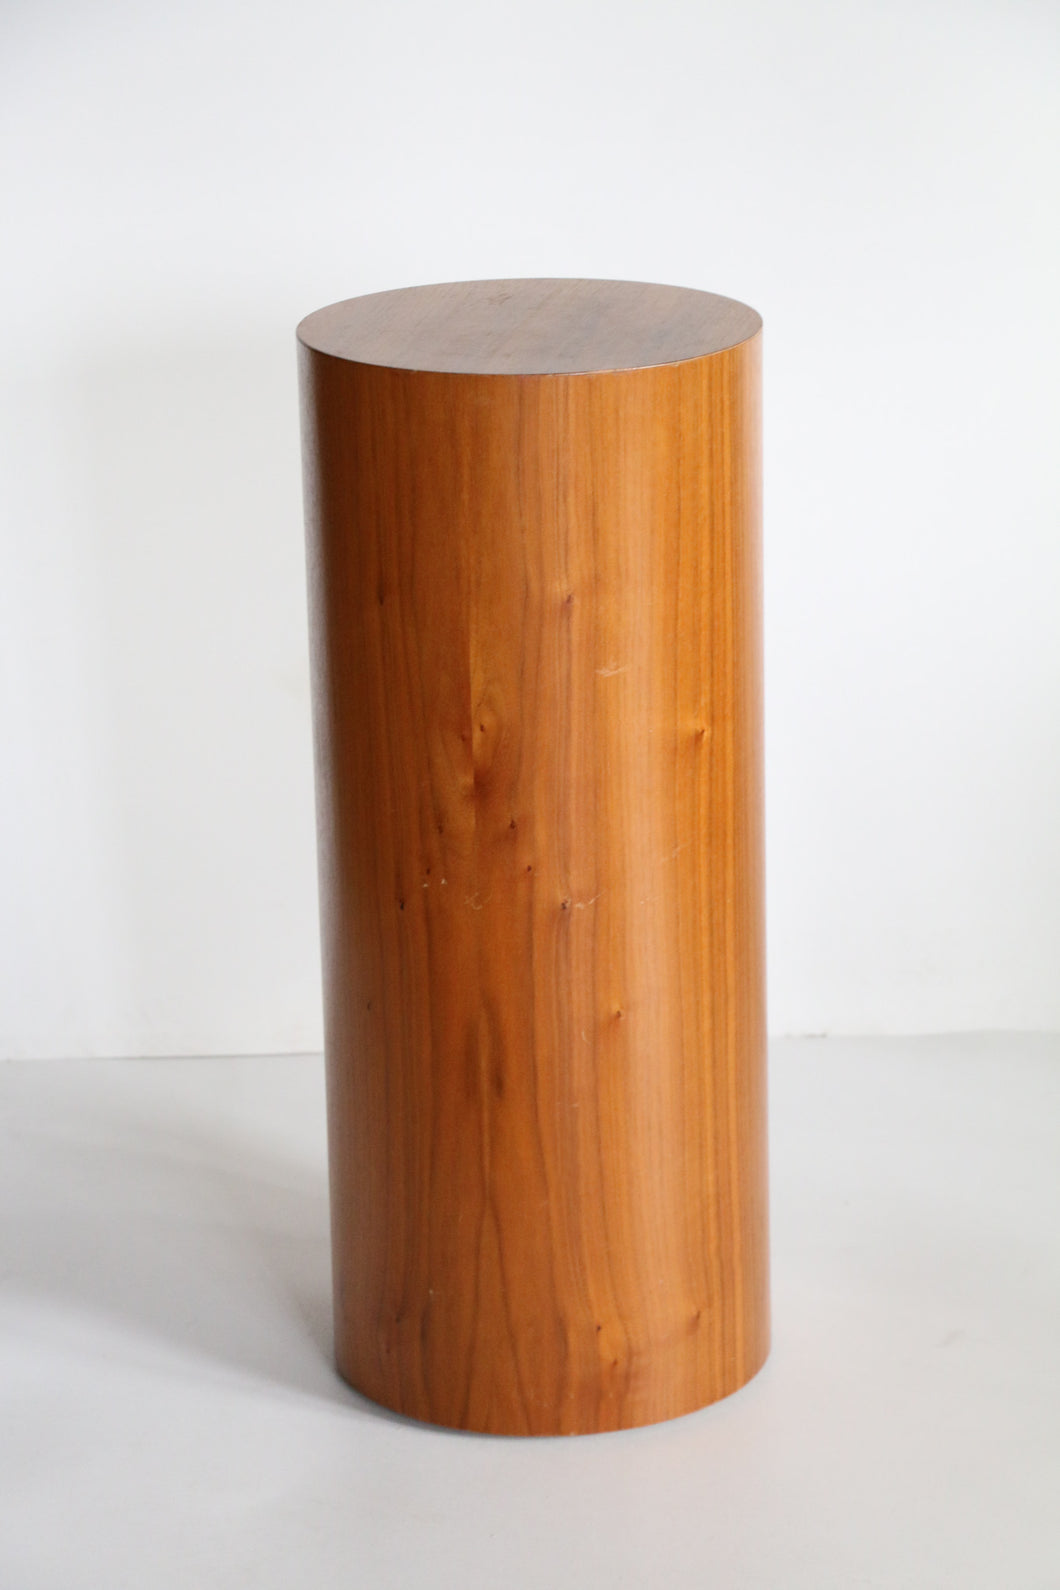 Tall Mid Century Danish Modern Round Circular Teak Drum Table / Display Pedestal